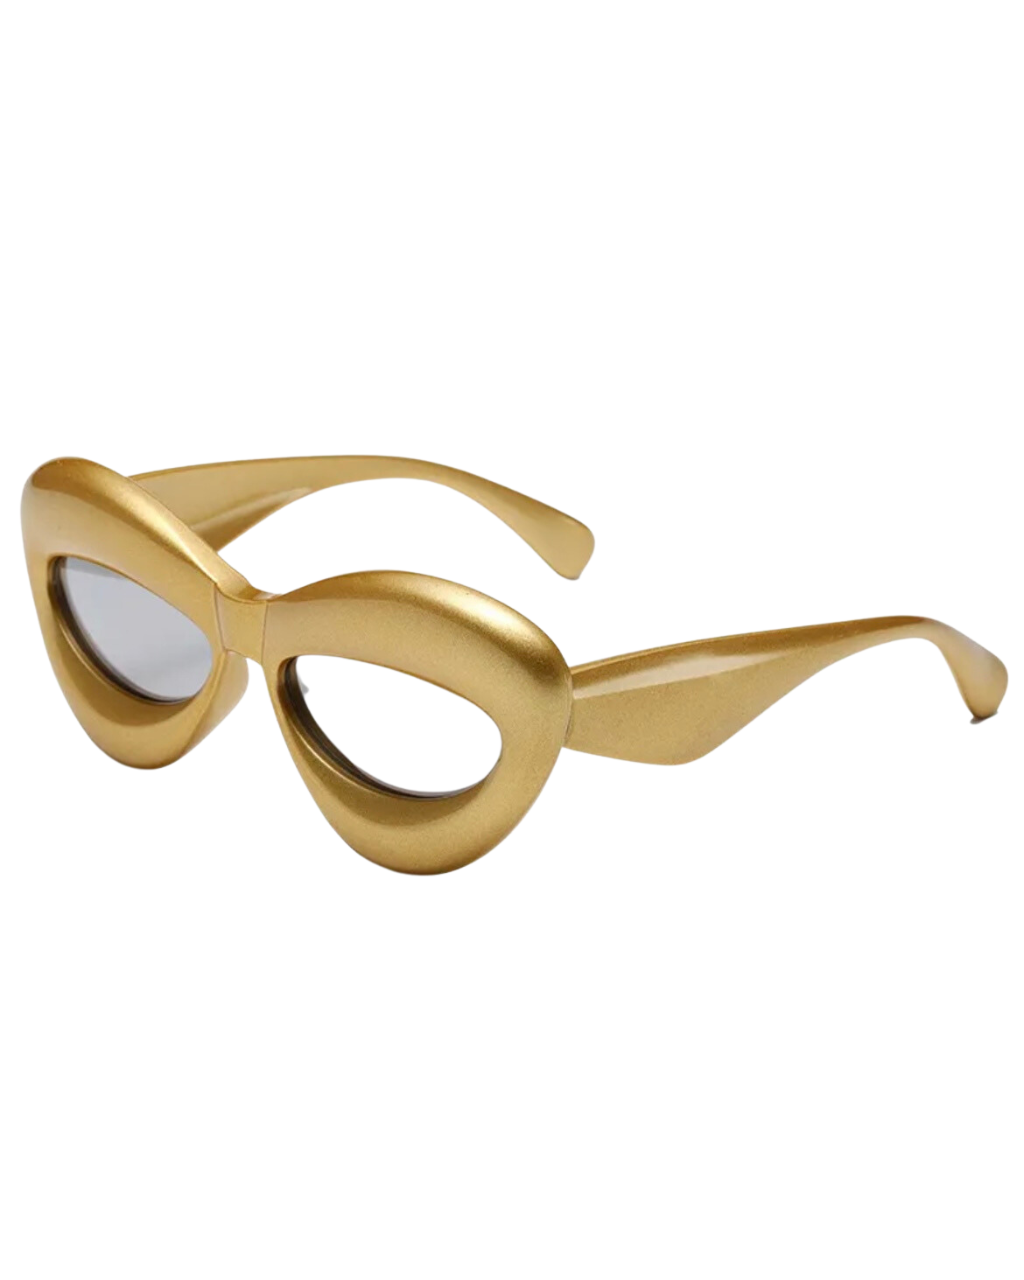 'True' Oval Sunglasses (Gold)